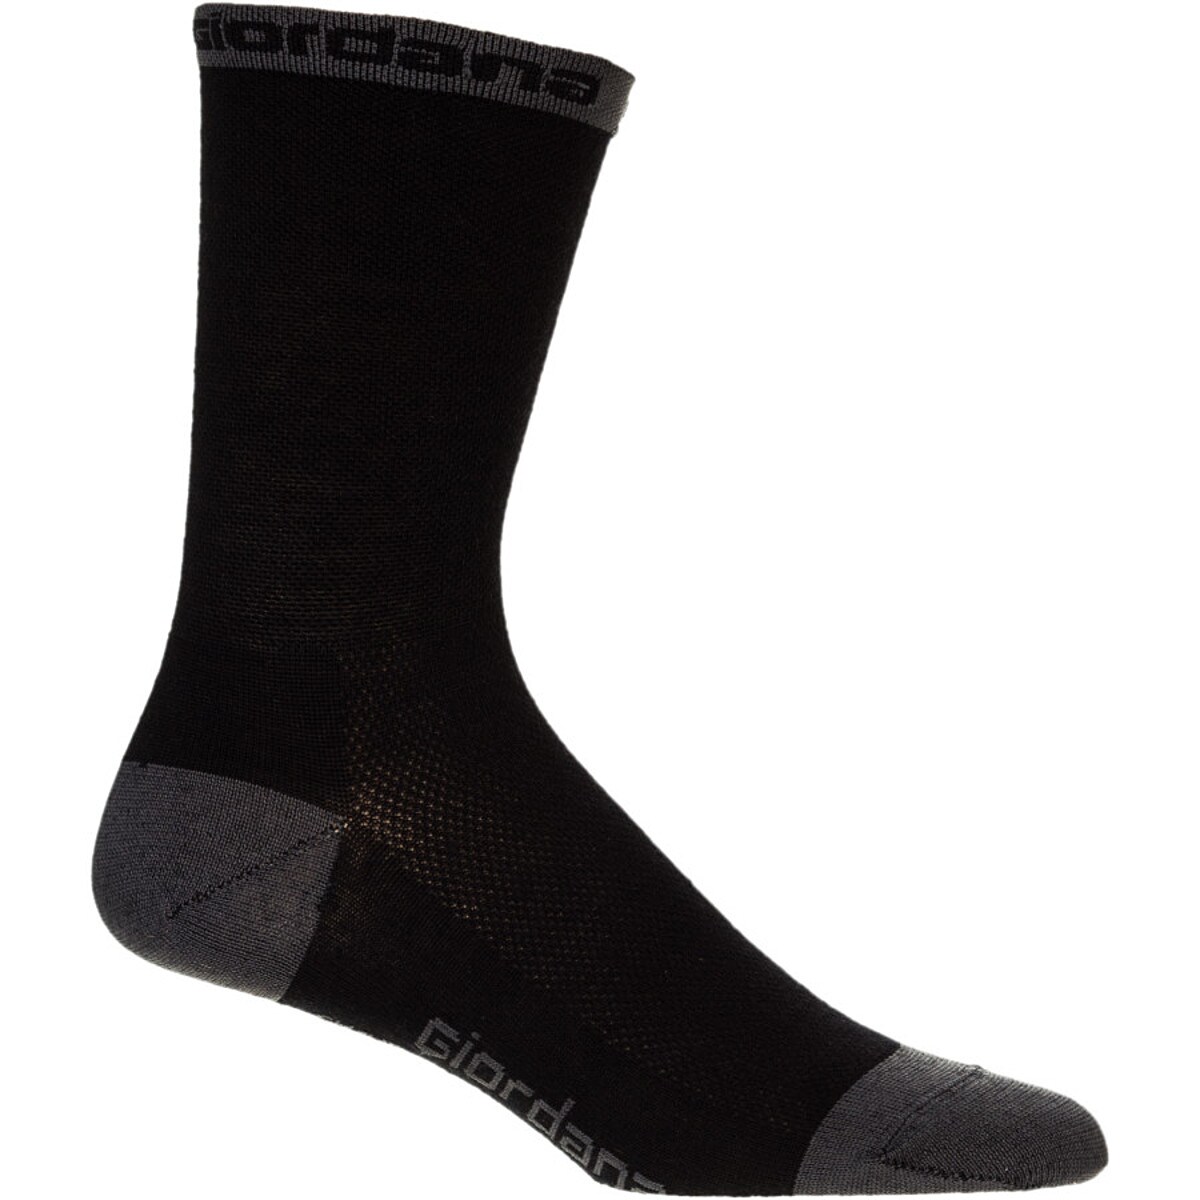 Giordana Merino Wool Tall Socks - Men